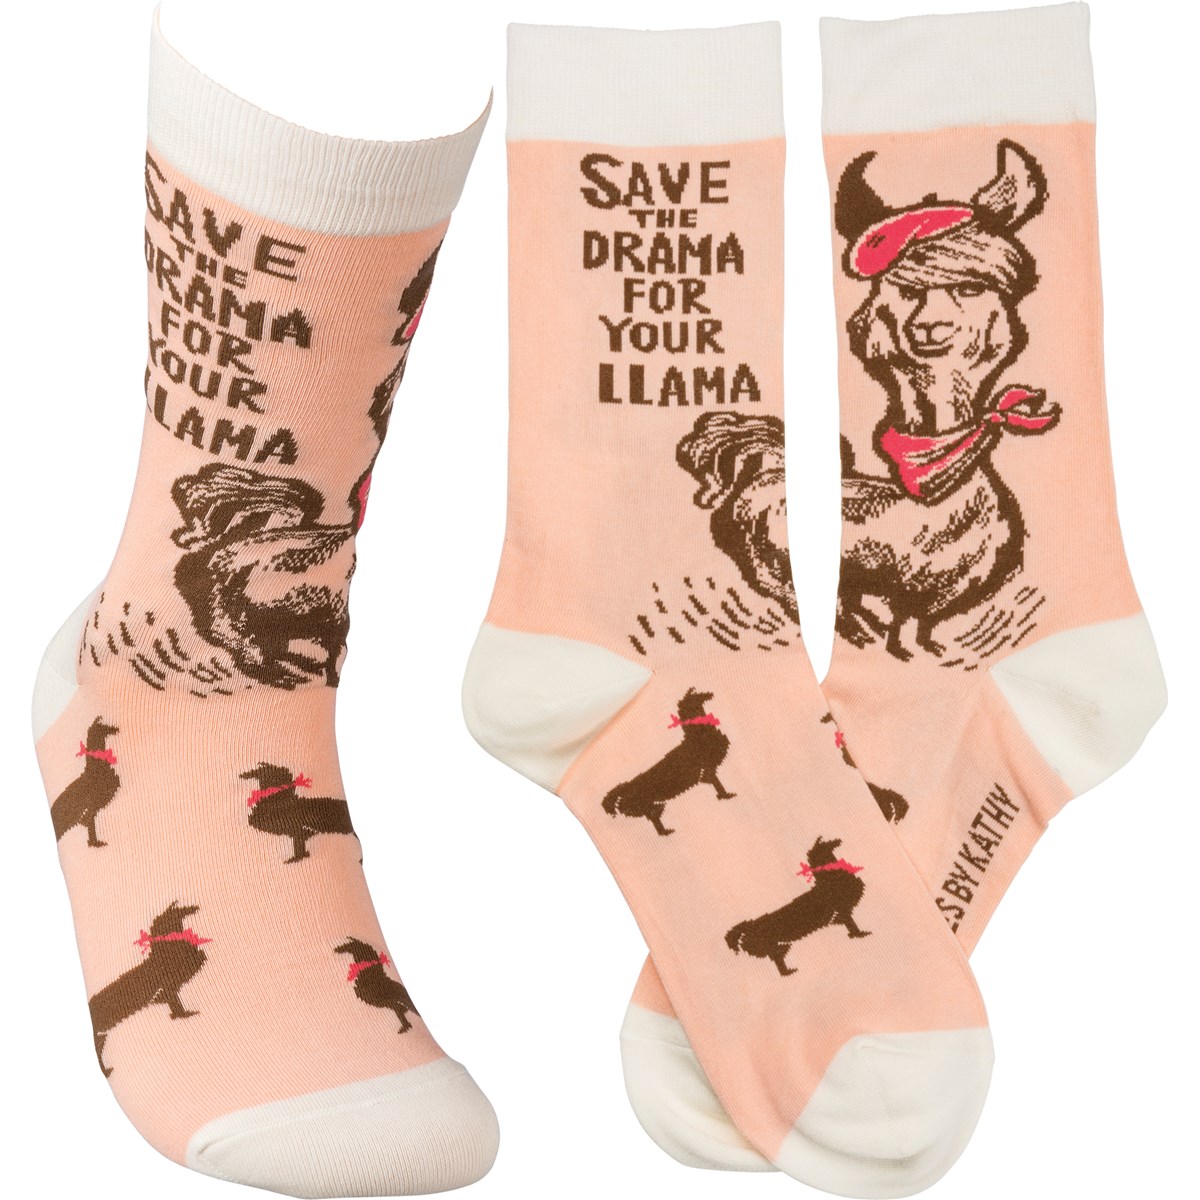 Save The Drama For Your Llama Socks - Cotton, Nylon, Spandex